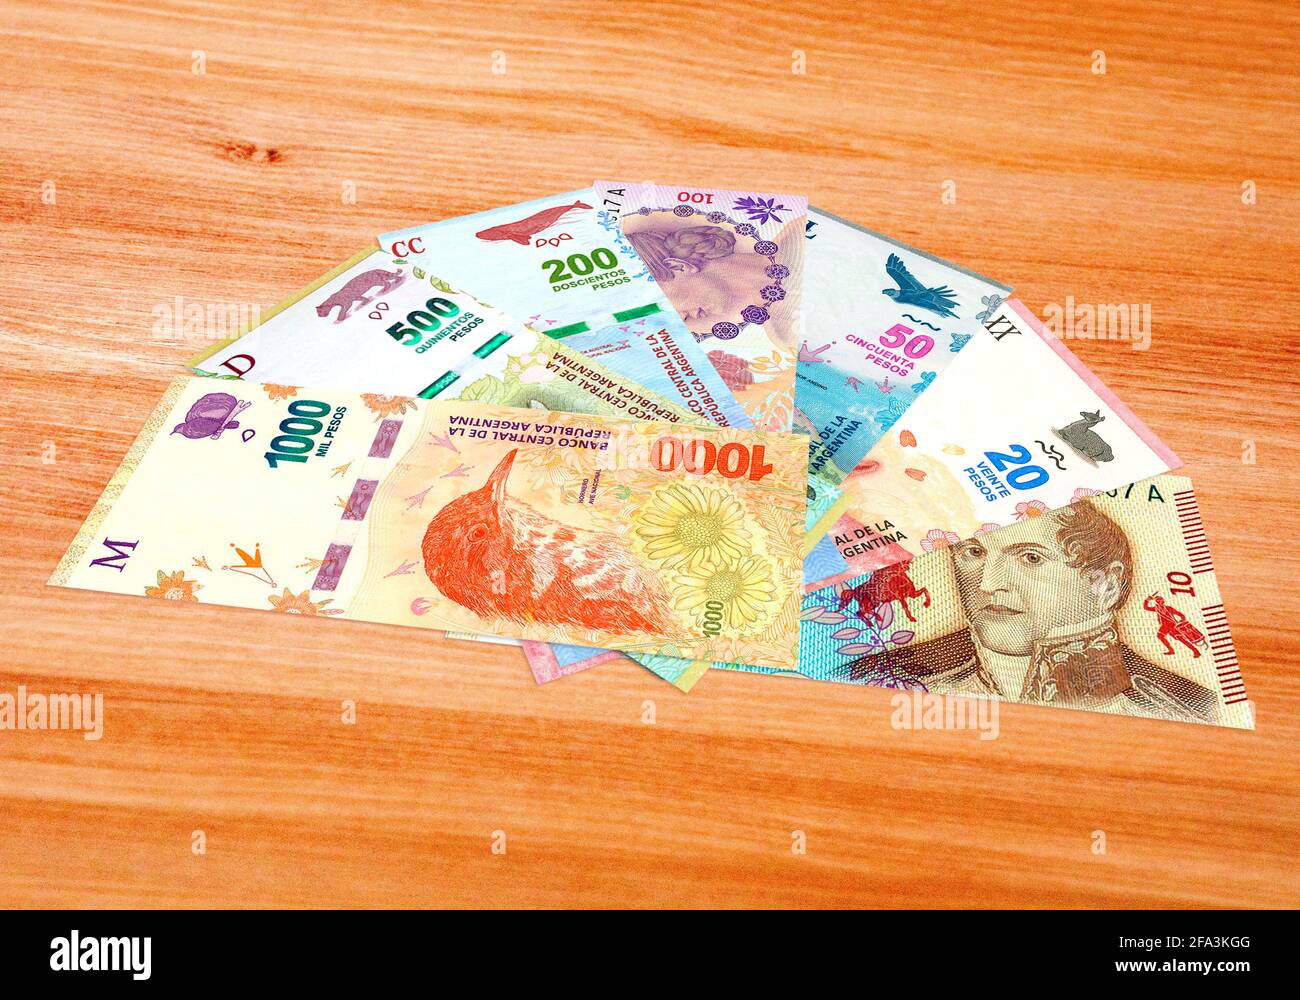 Money / Cash: Argentine peso bills Stock Photo